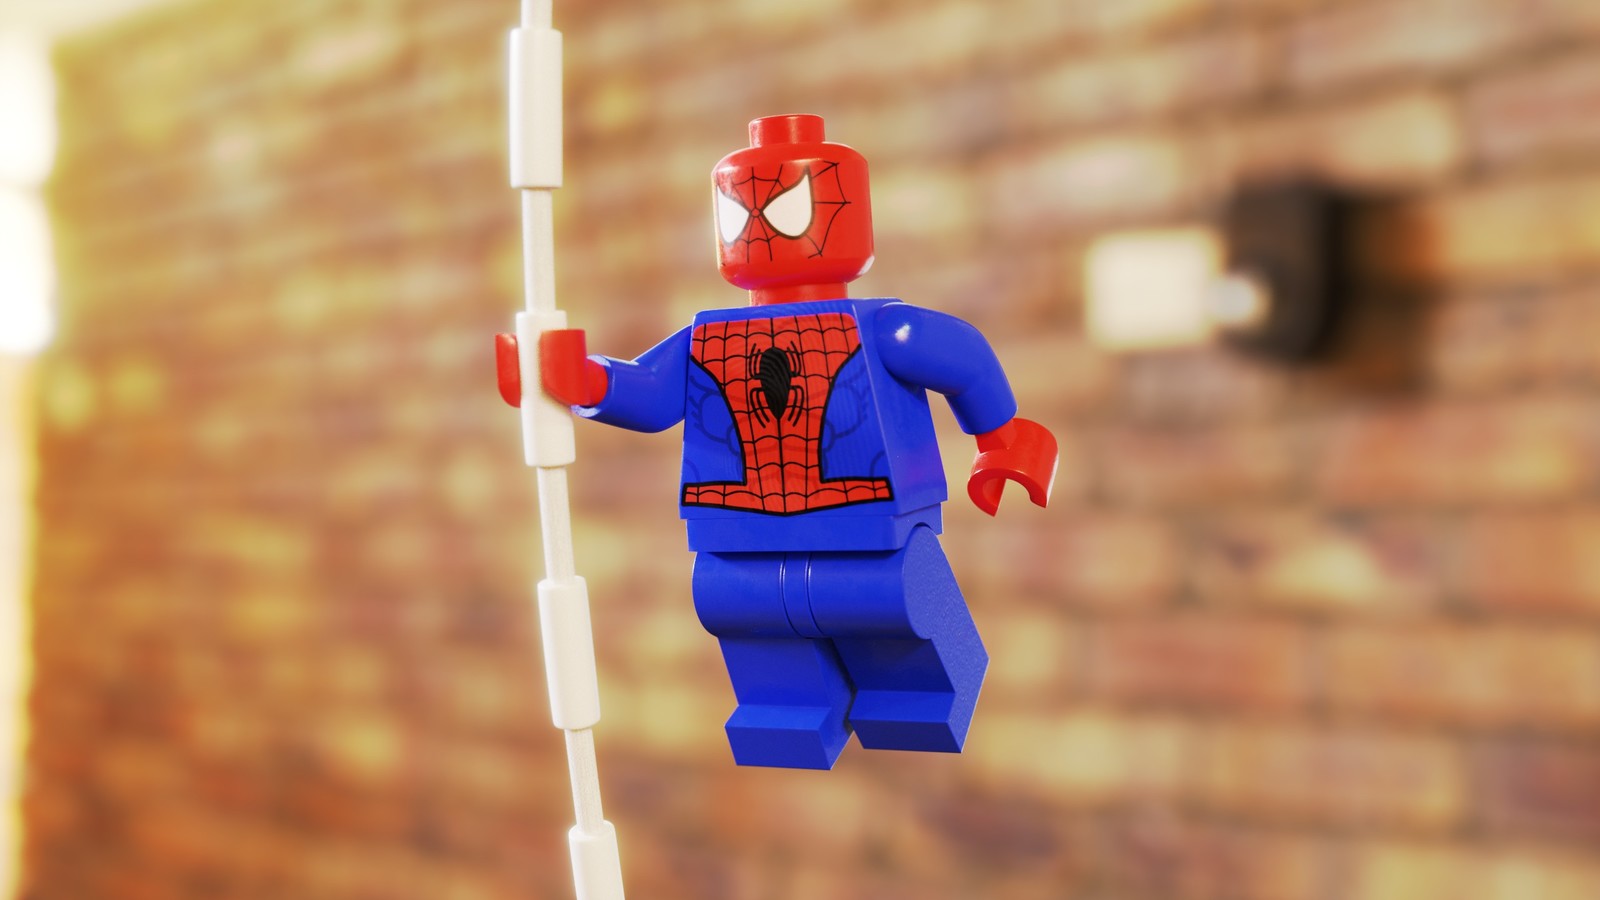 Spiderman Minifig